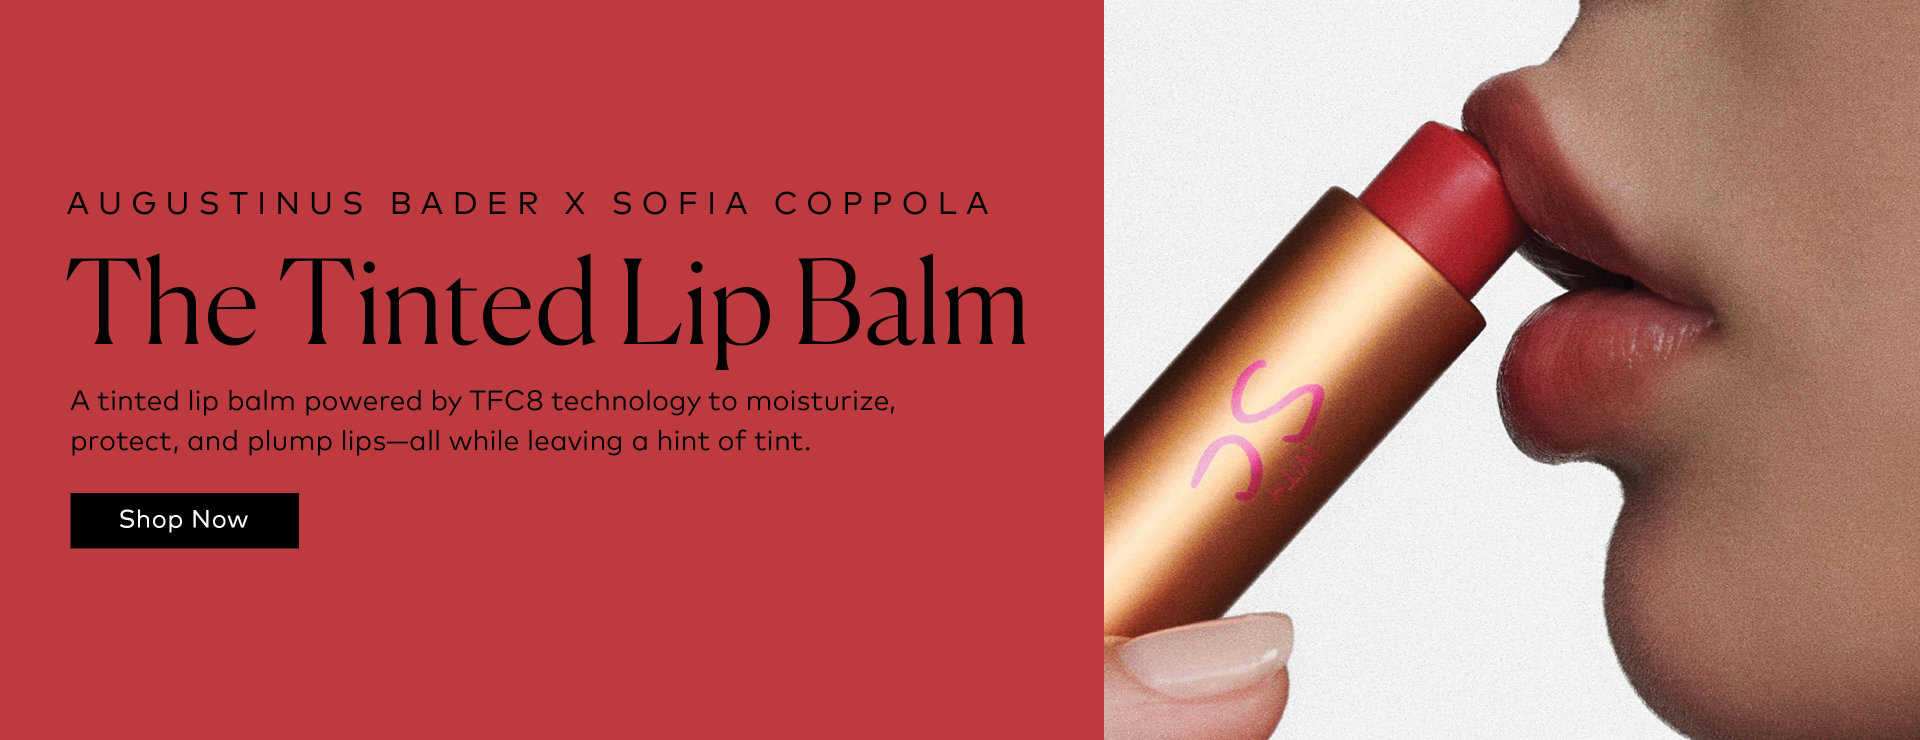 Shop the Augustinus Bader x Sofia Coppola The Tinted Lip Balm on Beautylish.com! 